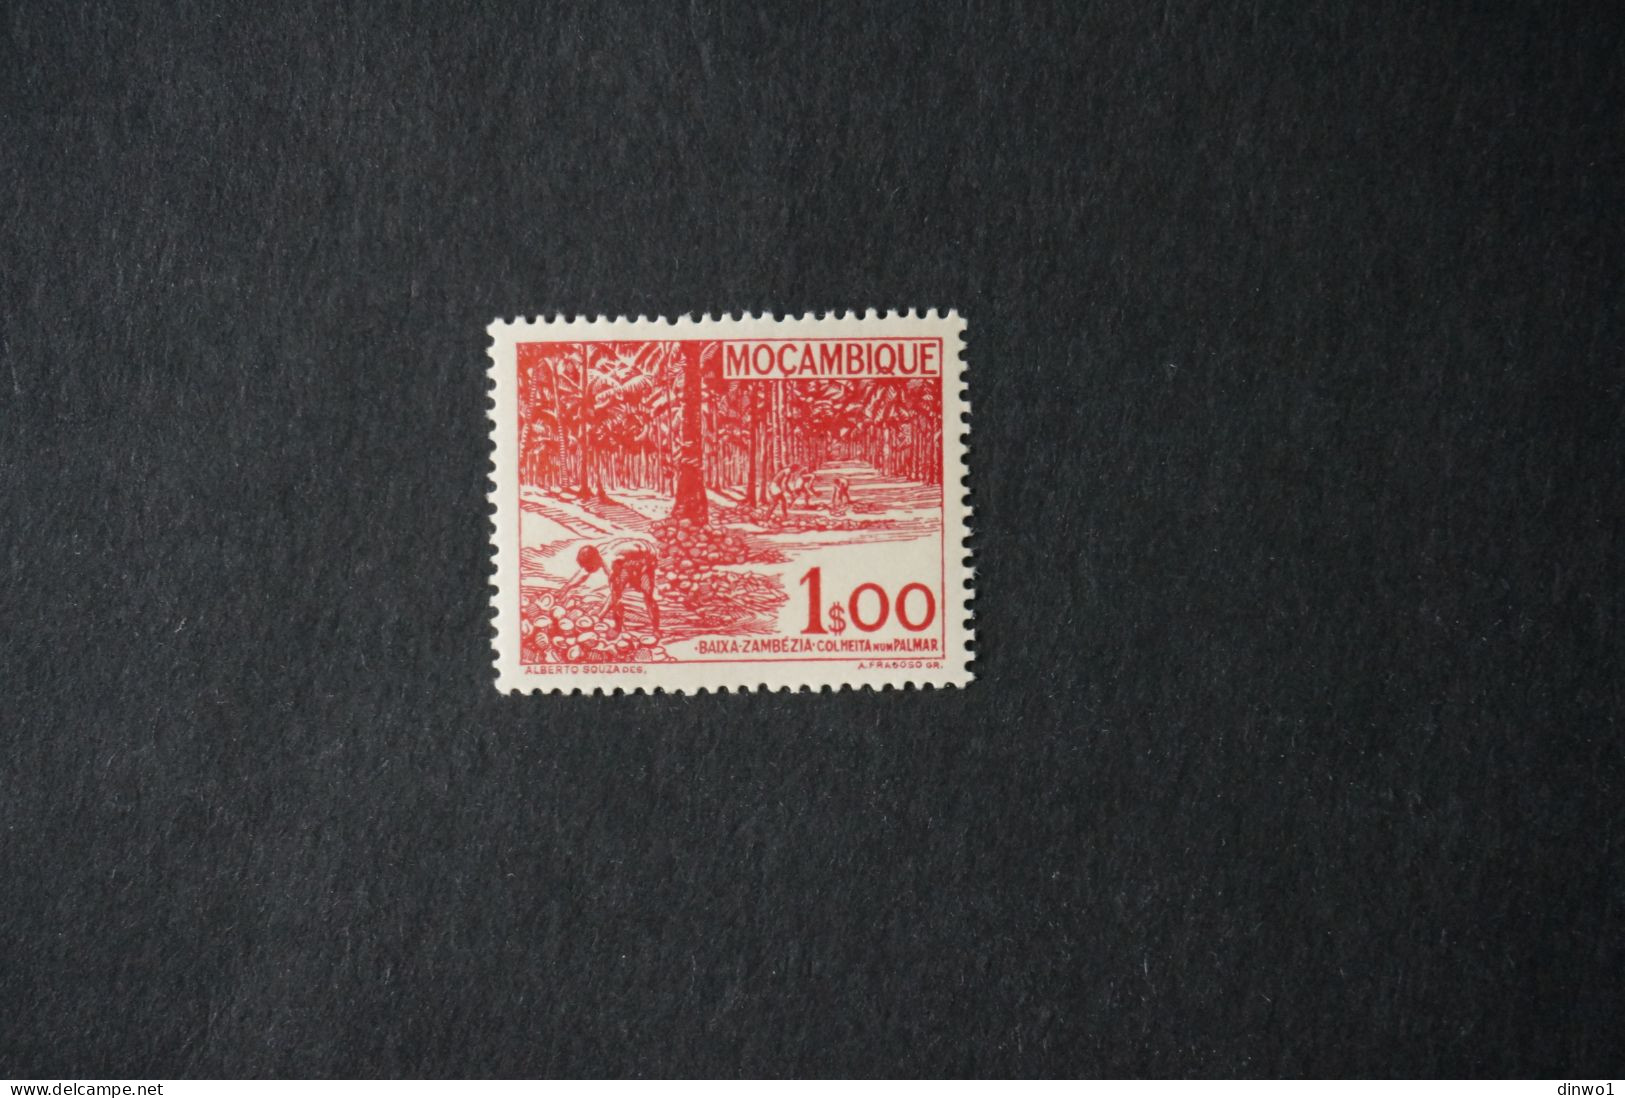 (T3) Mozambique - 1948 Local Views 1$00 - MNH - Mozambique